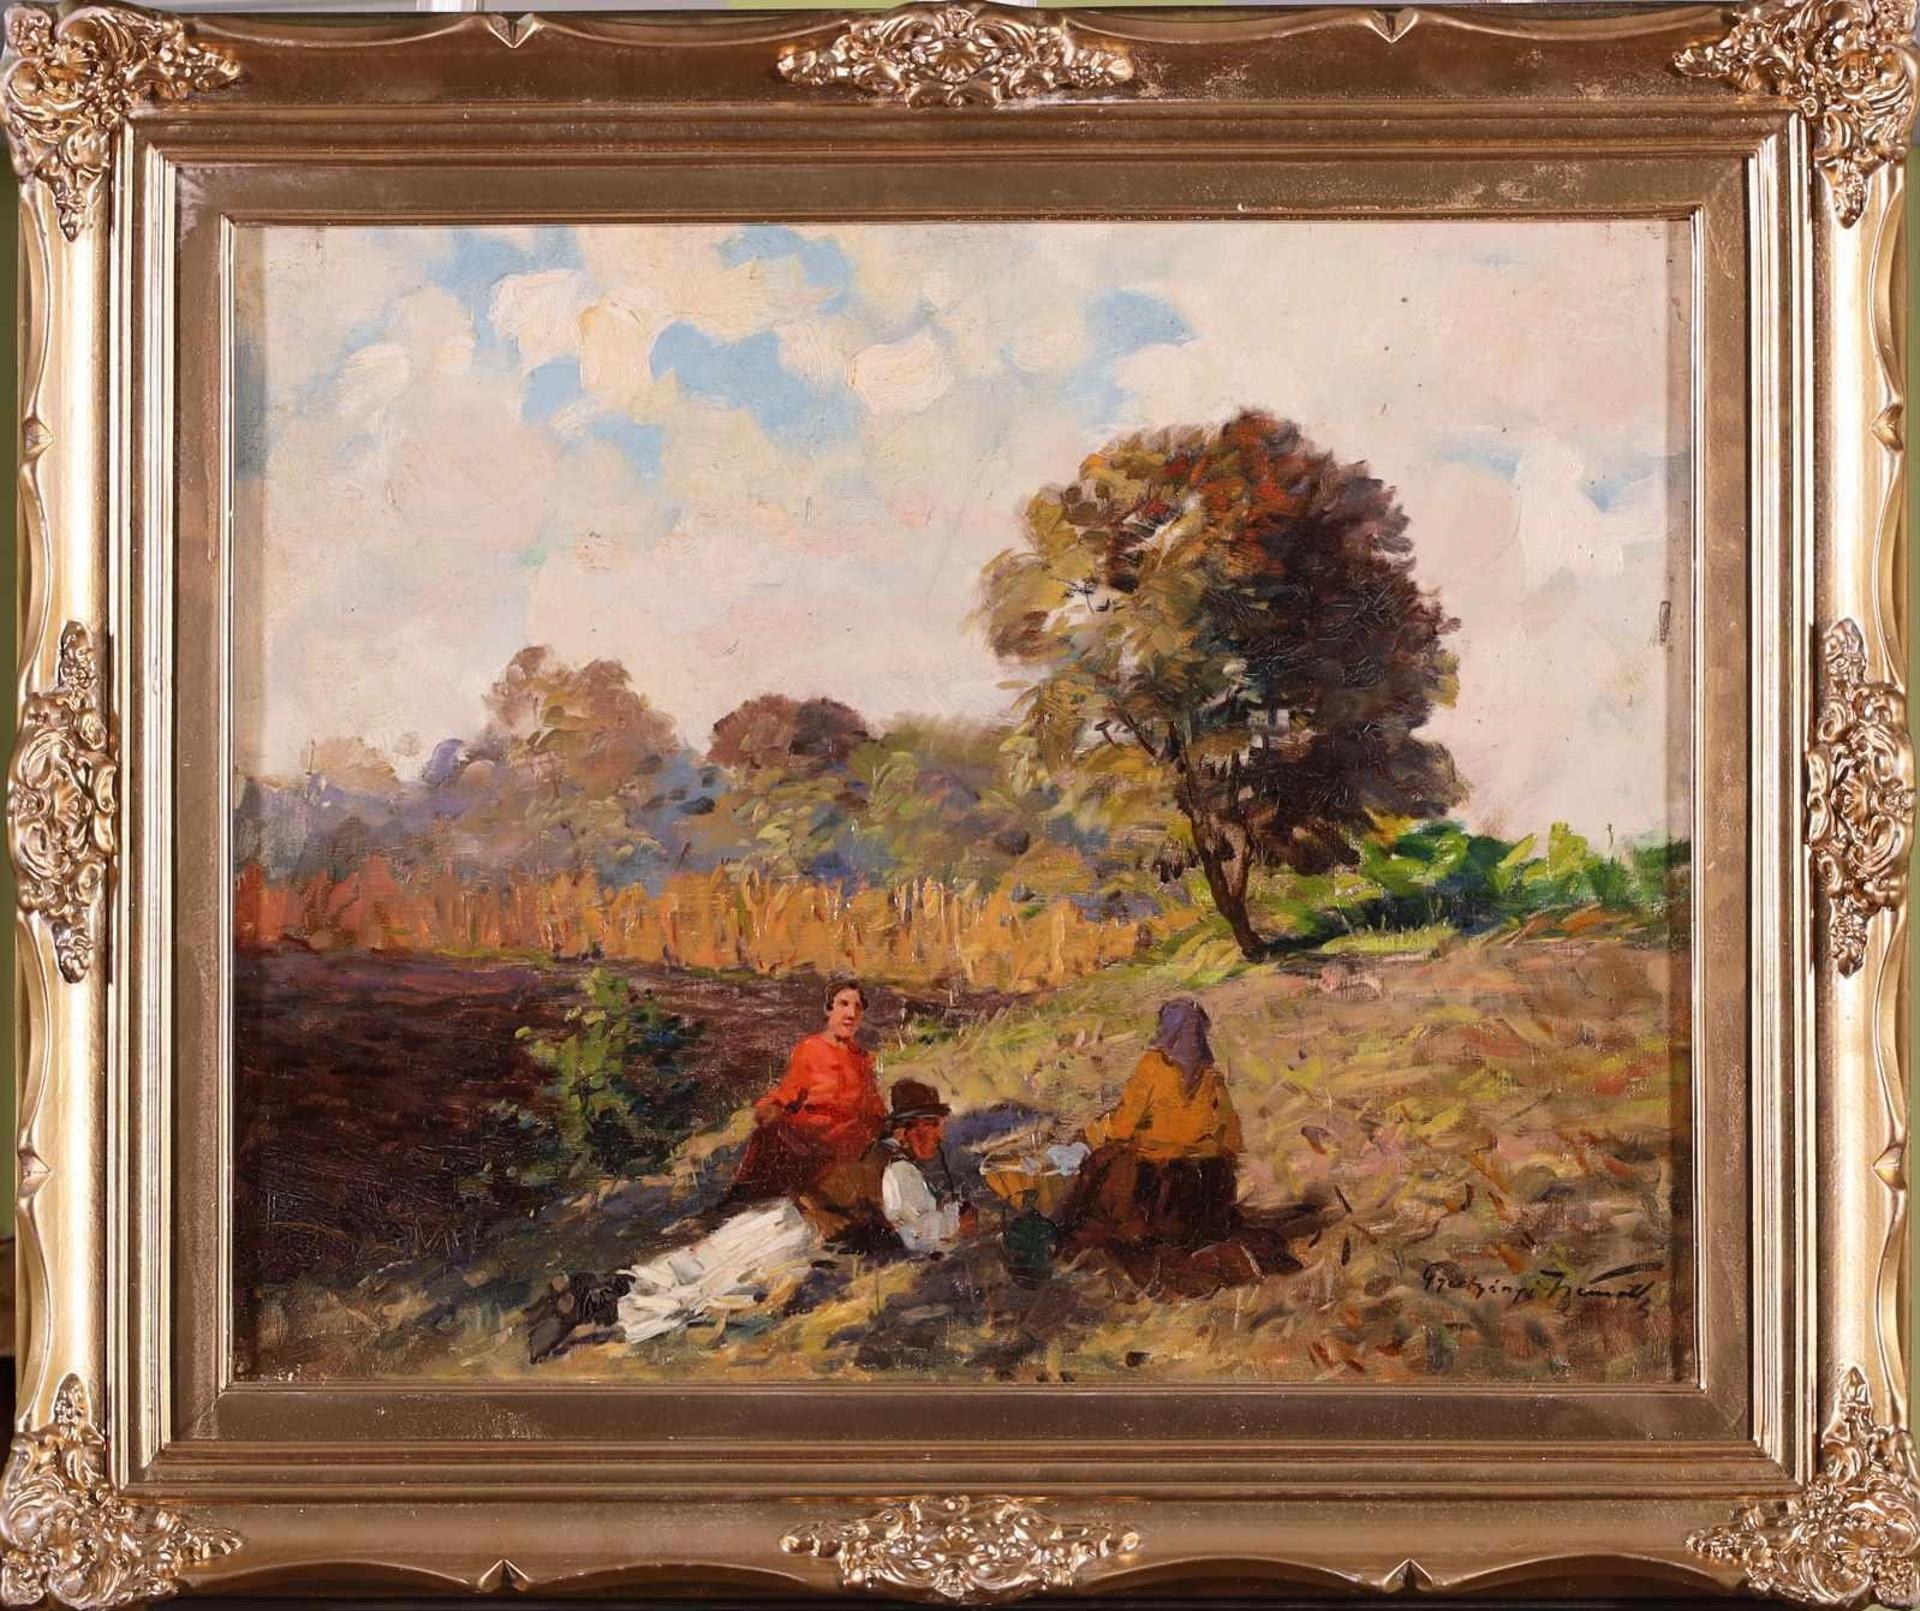 Gyula Gyertyani Nemeth (1890-1976) - Untitled, Midday Rest in the Field